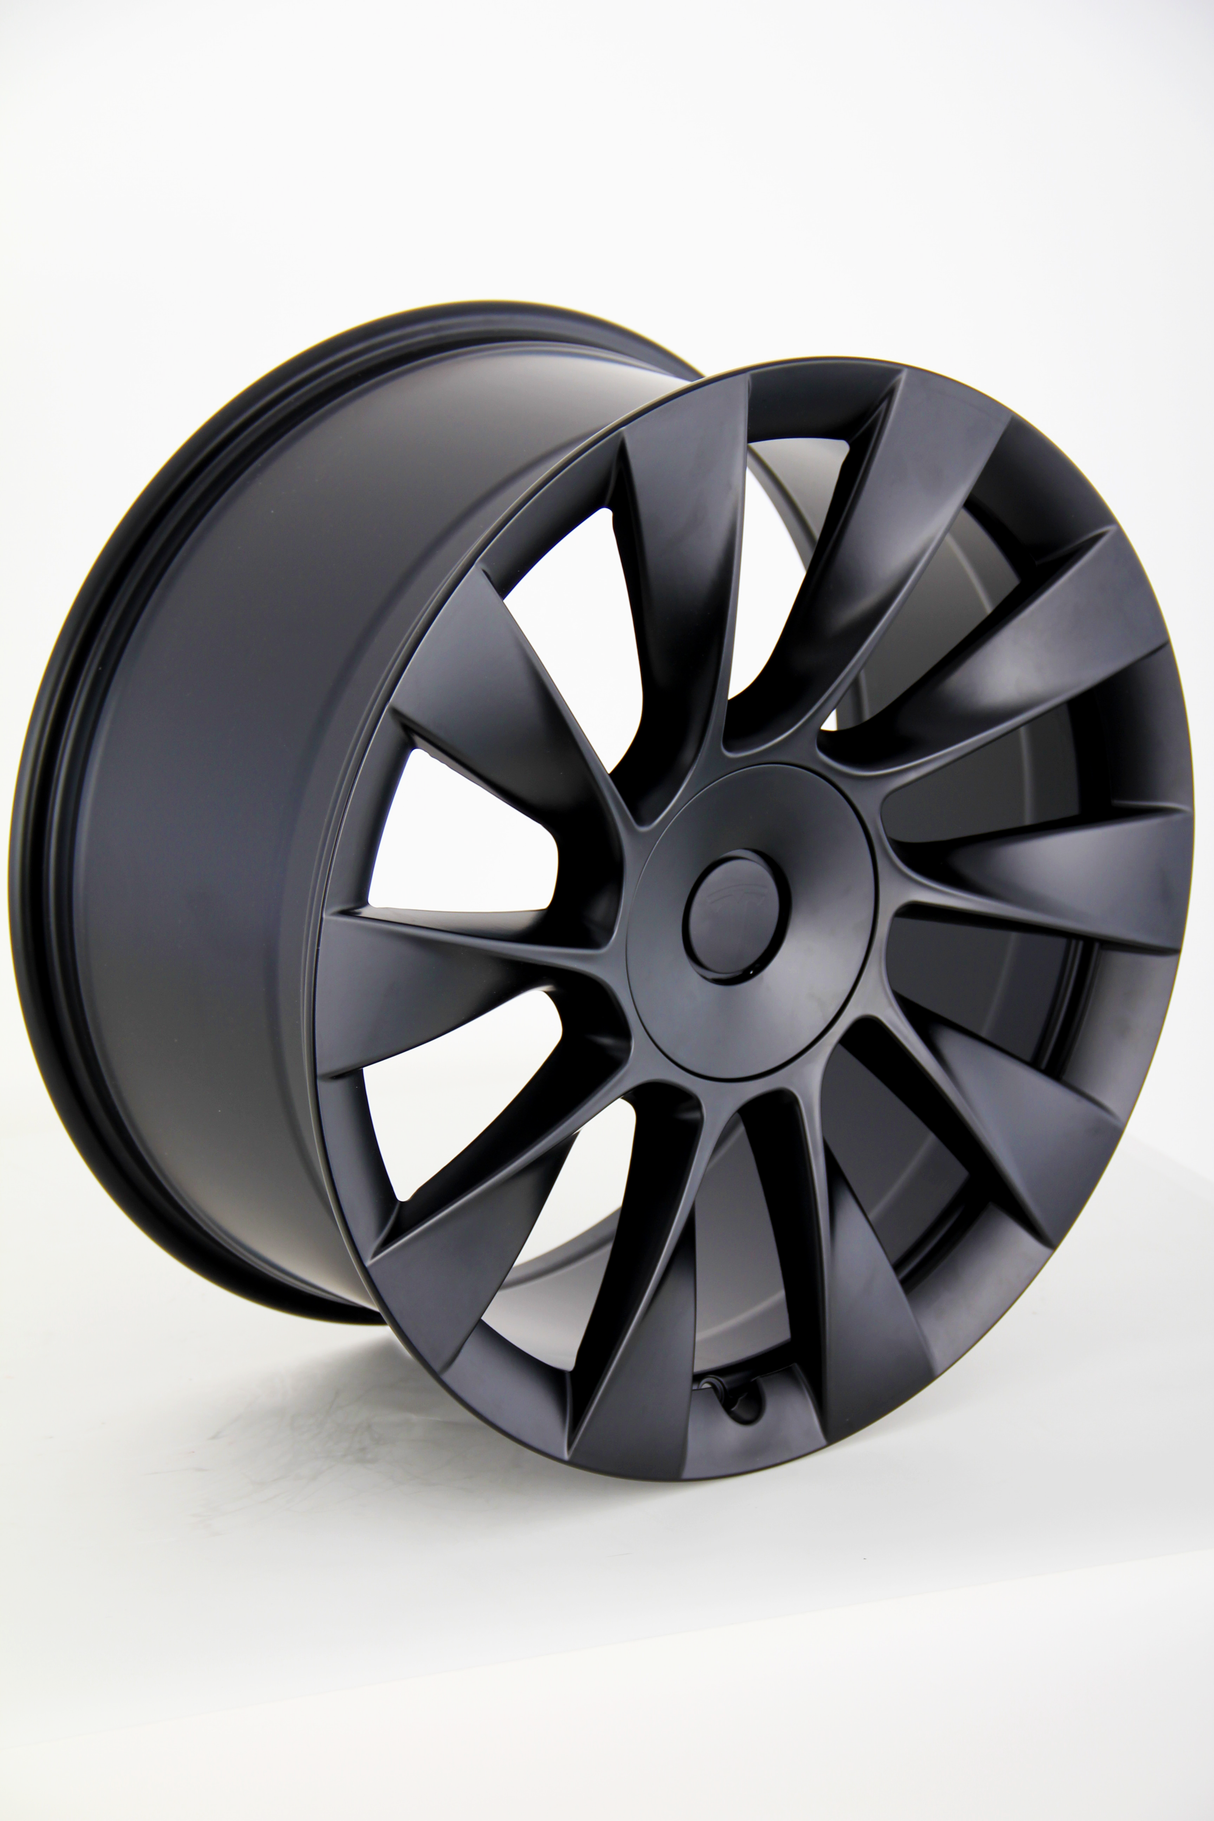 Model Y: 20" Satin Black Turbine Style Alloy Wheels 19+